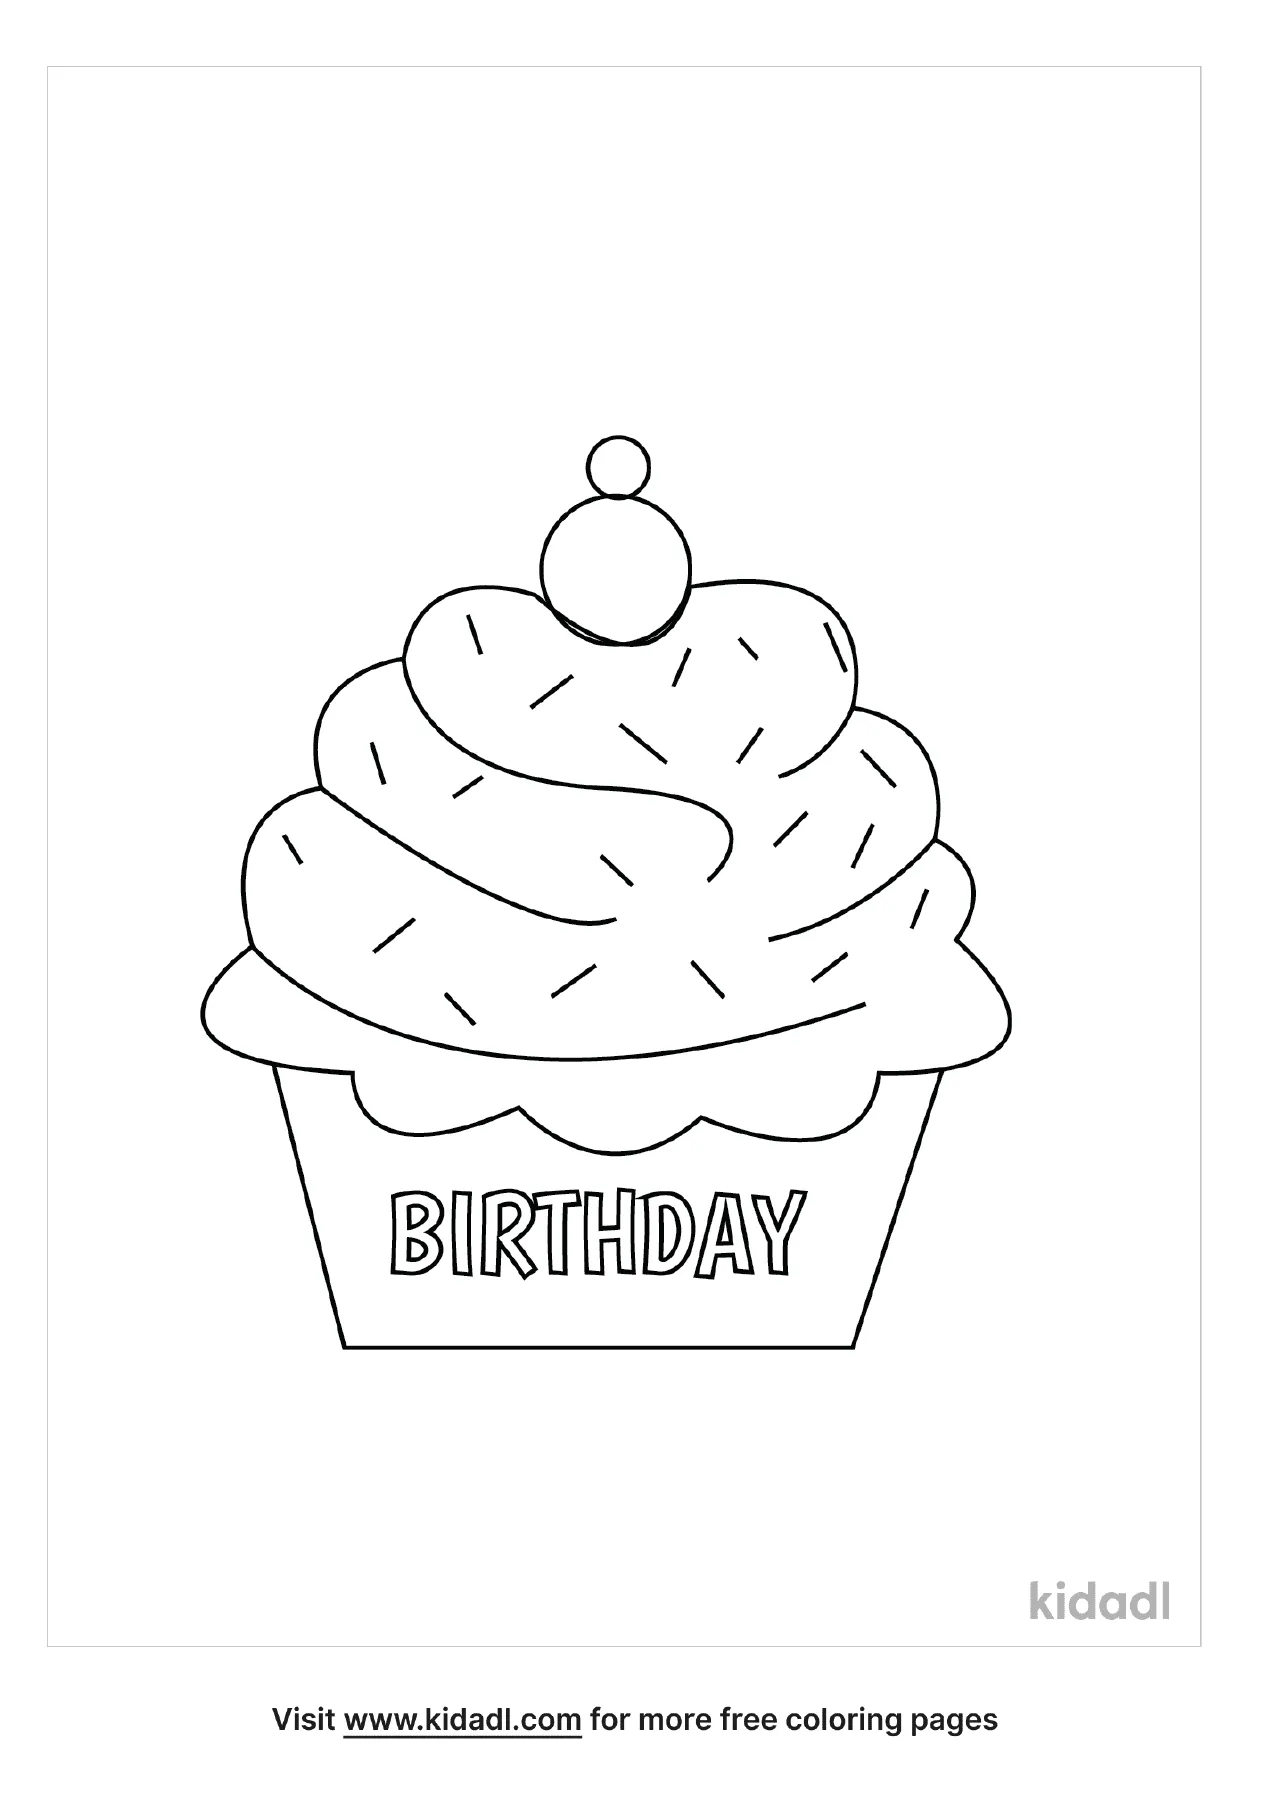 Free Cupcake Birthday Coloring Page | Coloring Page Printables | Kidadl